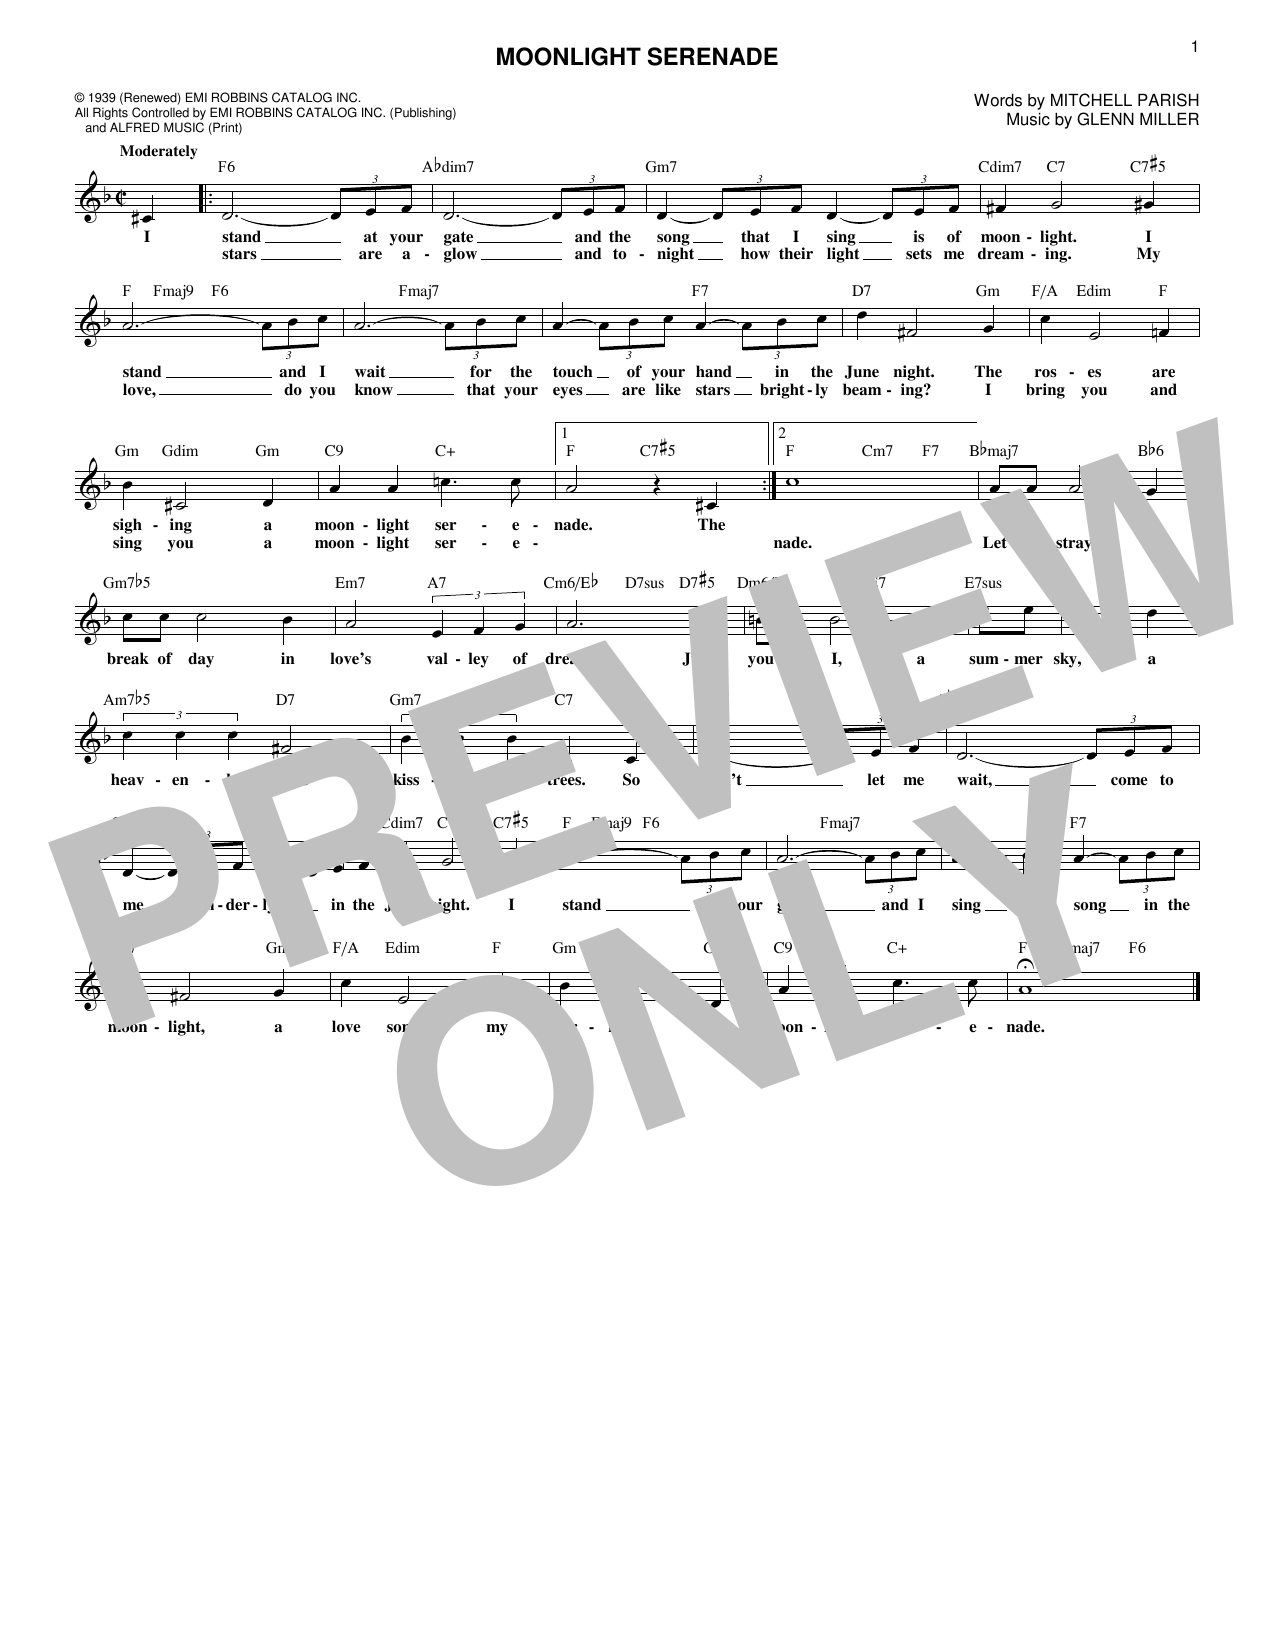 Glen Miller Moonlight Serenade sheet music notes and chords arranged for Lead Sheet / Fake Book